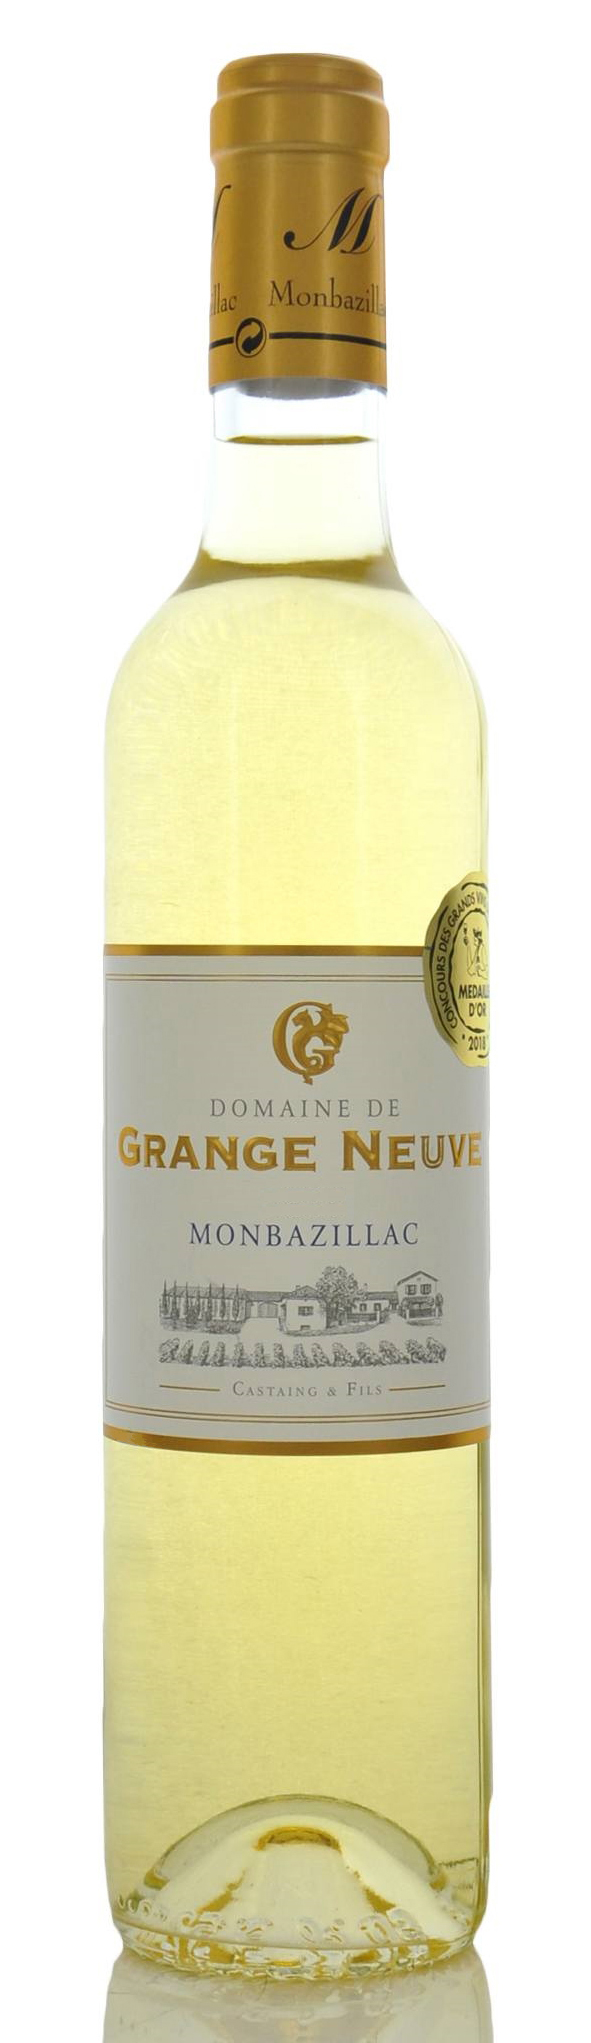 Montbazillac Domaine Grange Neuve 50cl